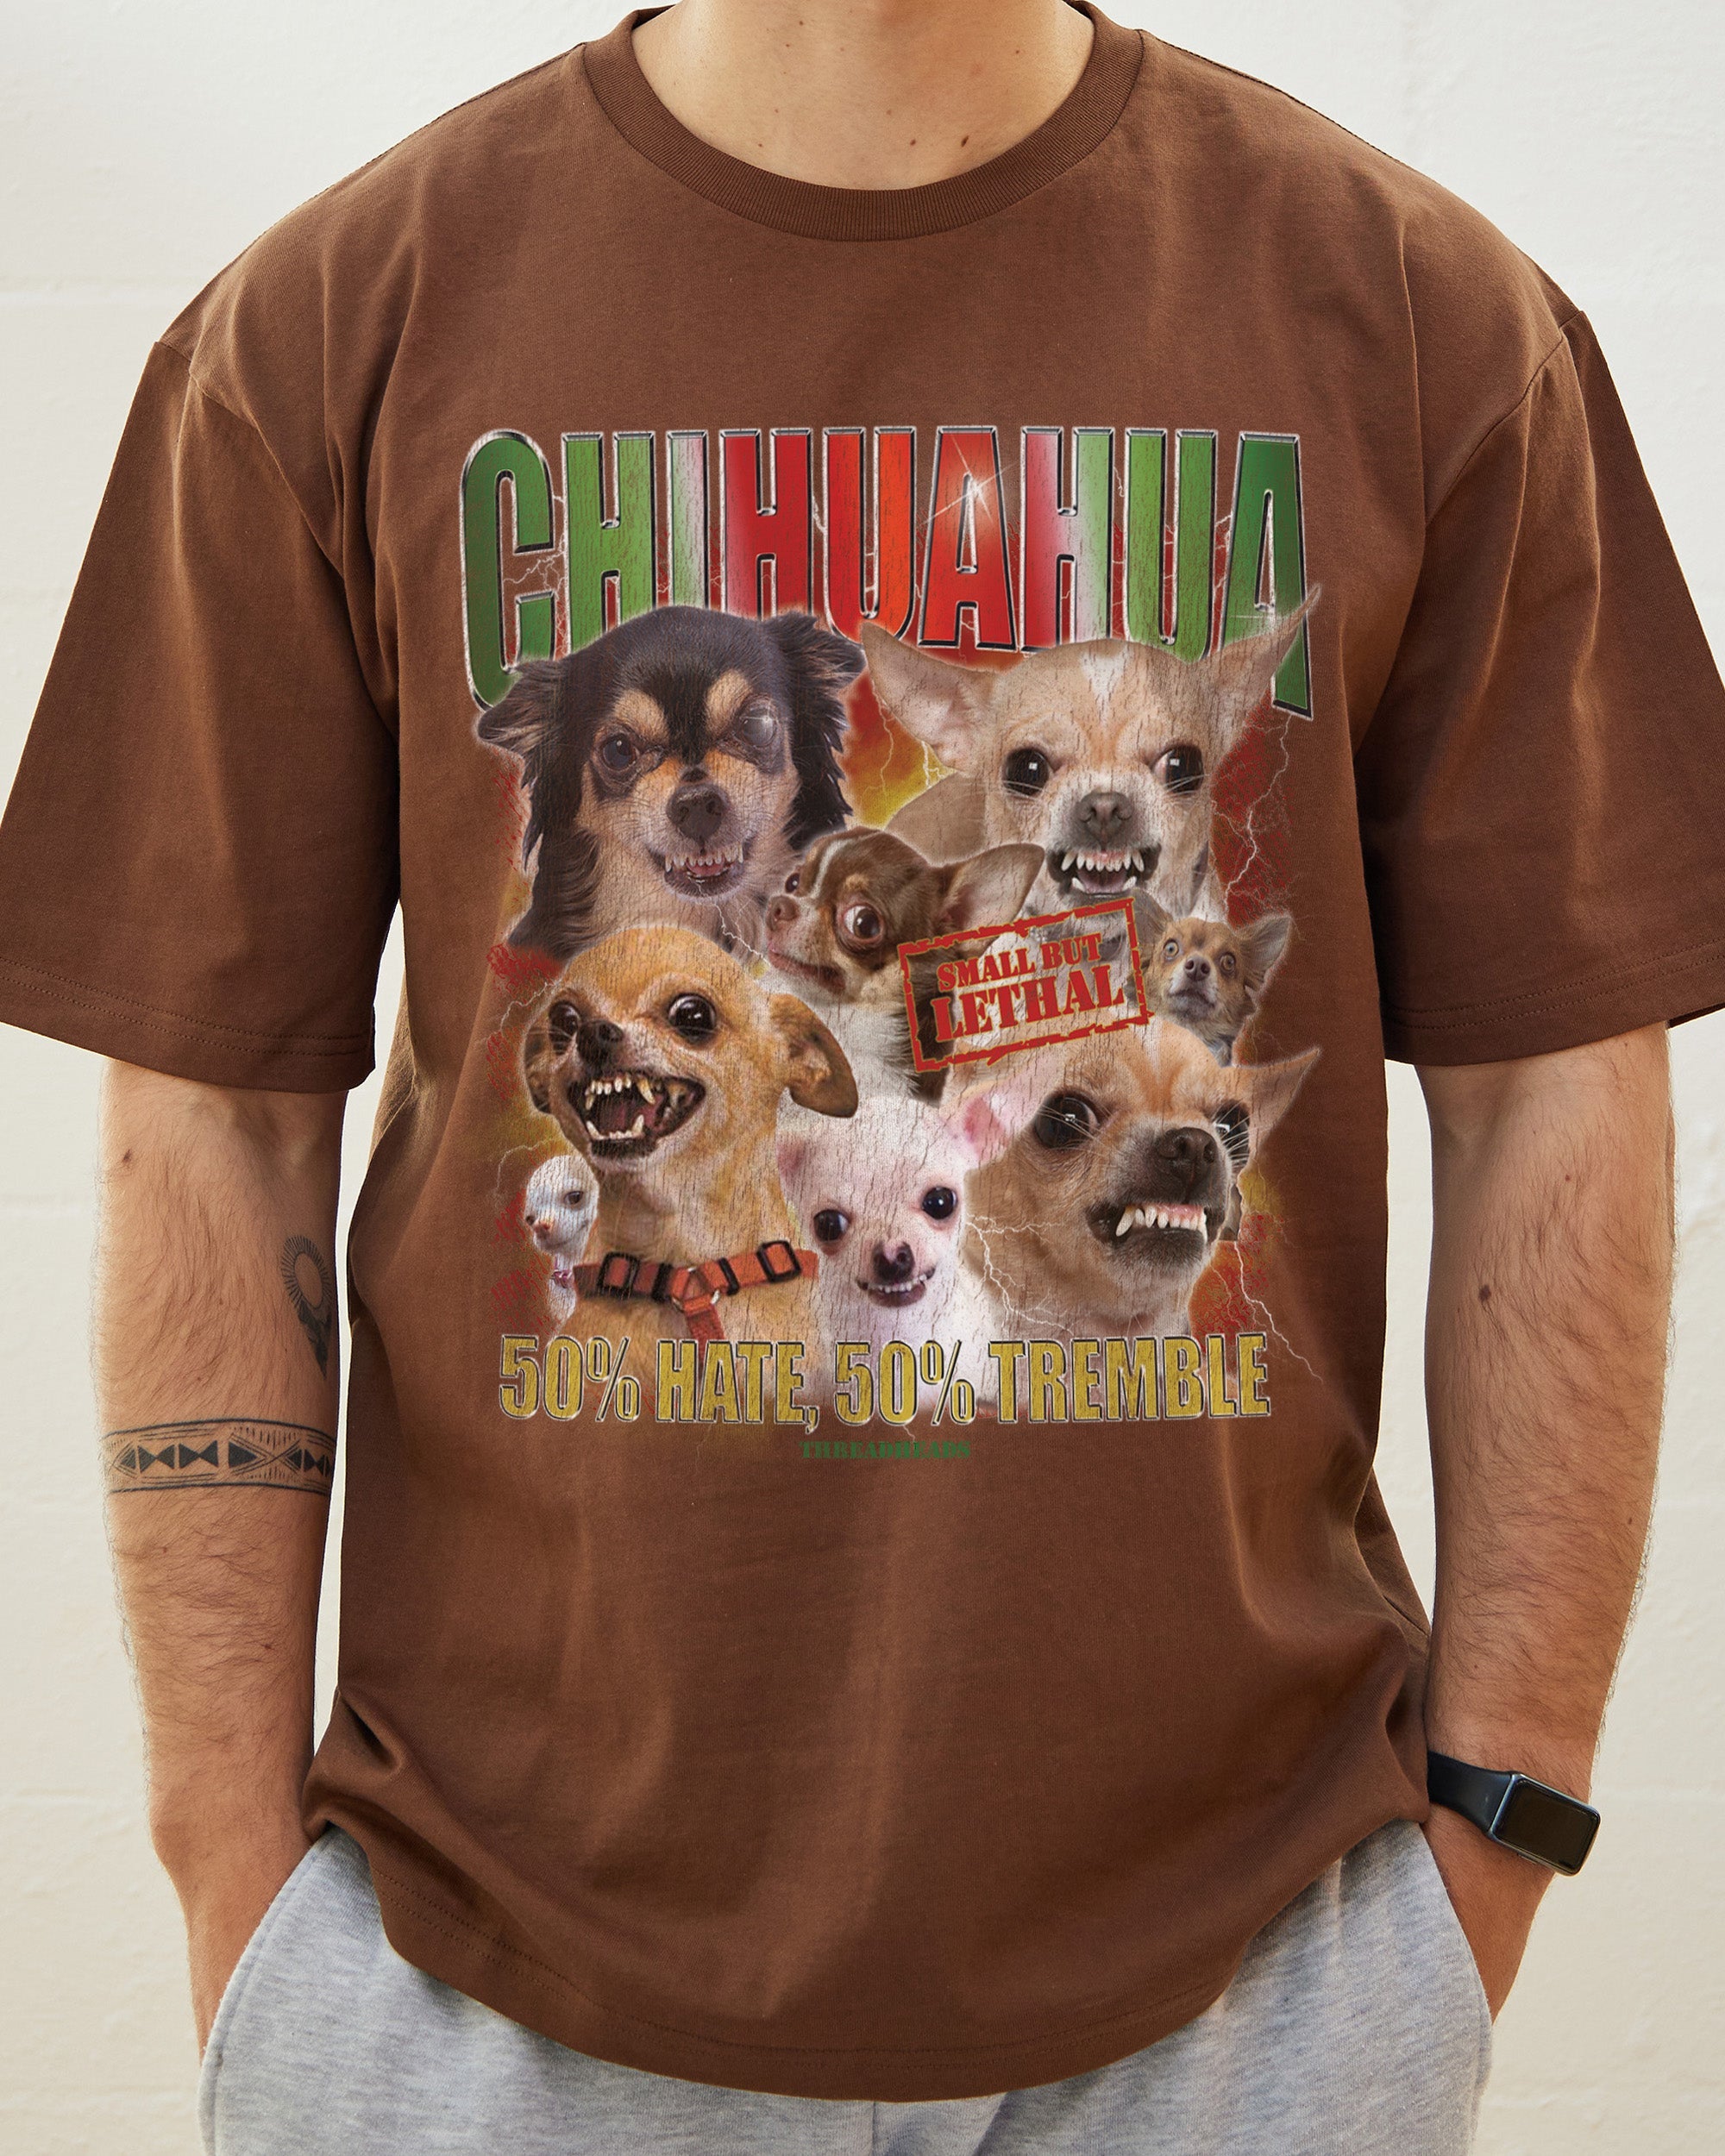 The Chihuahua T-Shirt, Vintage Distressed T-Shirt